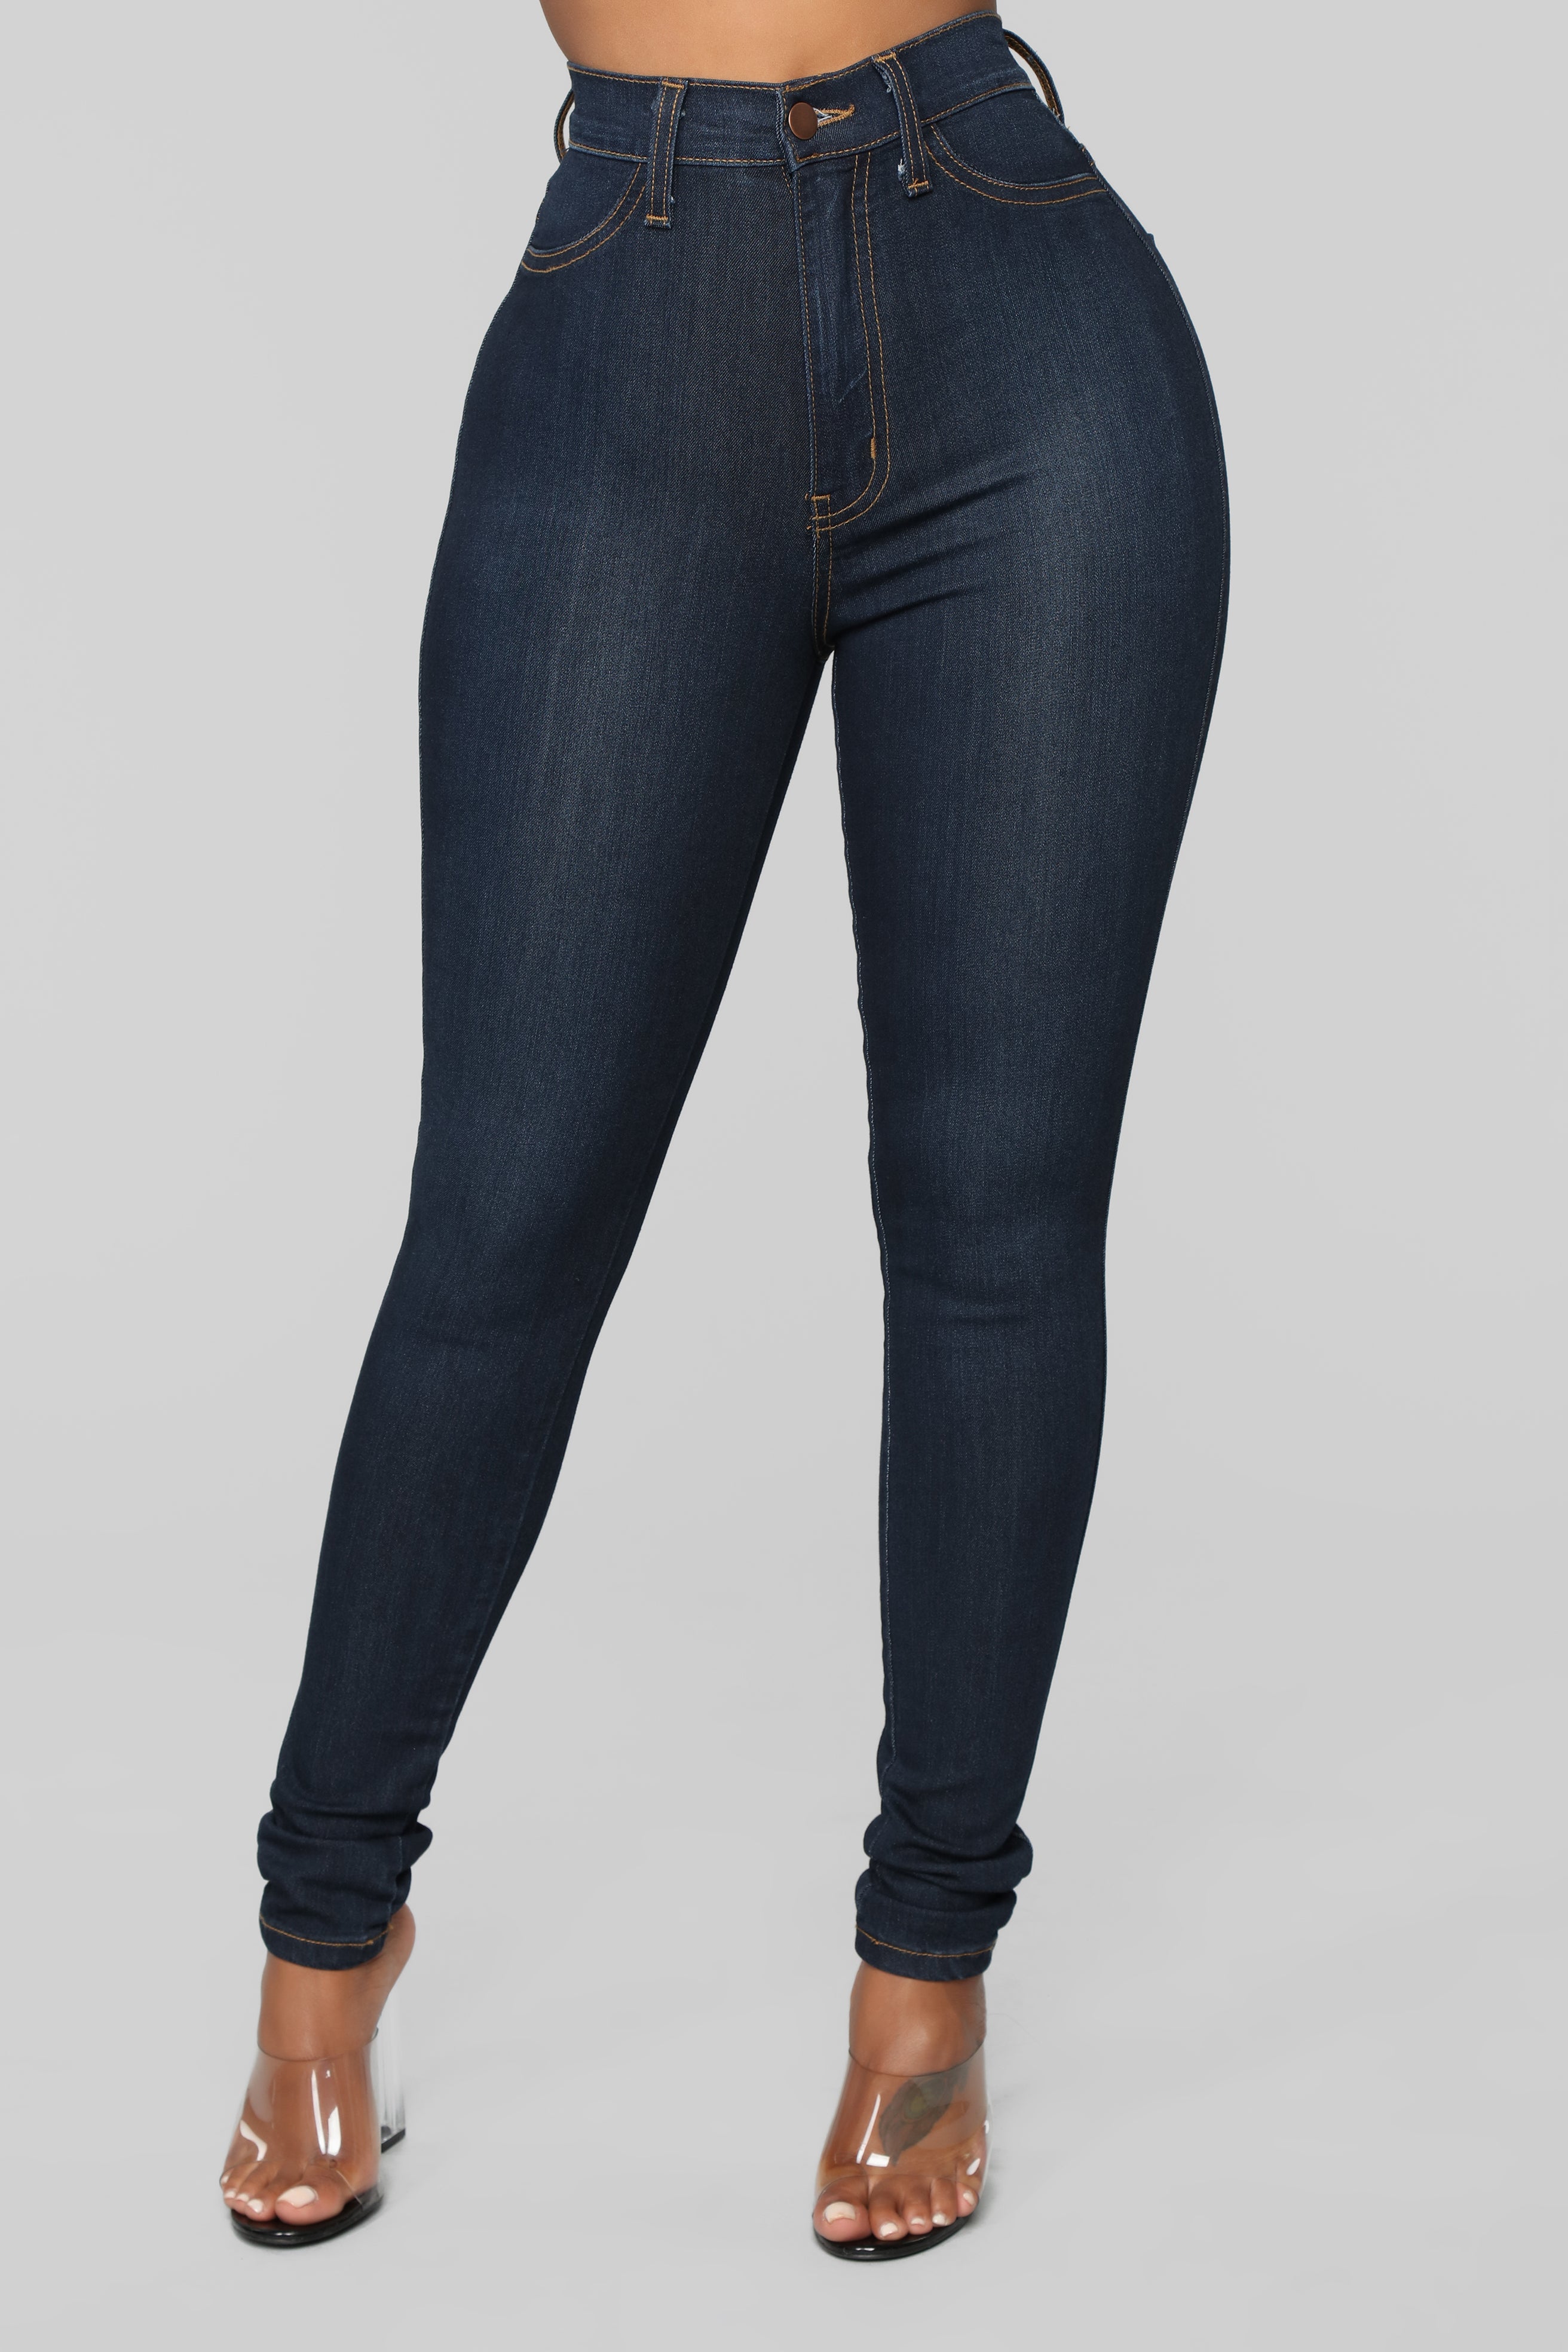 classic-high-waist-skinny-jeans-dark